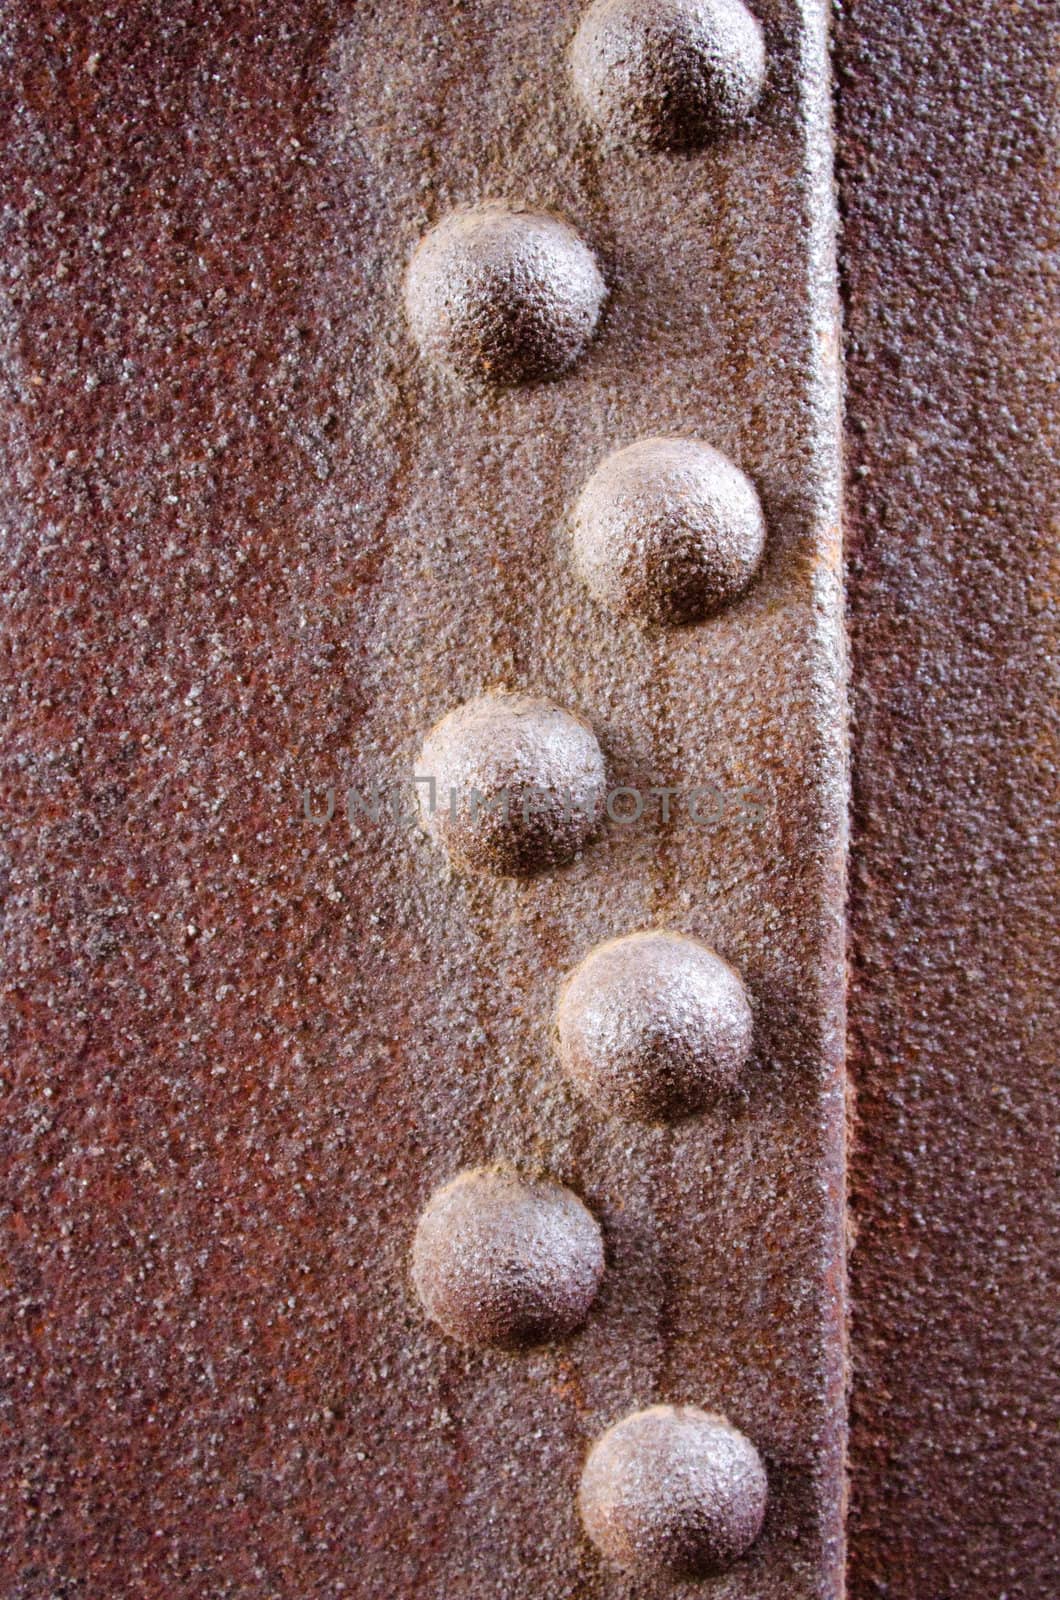 rivets on a rusty metal sheet